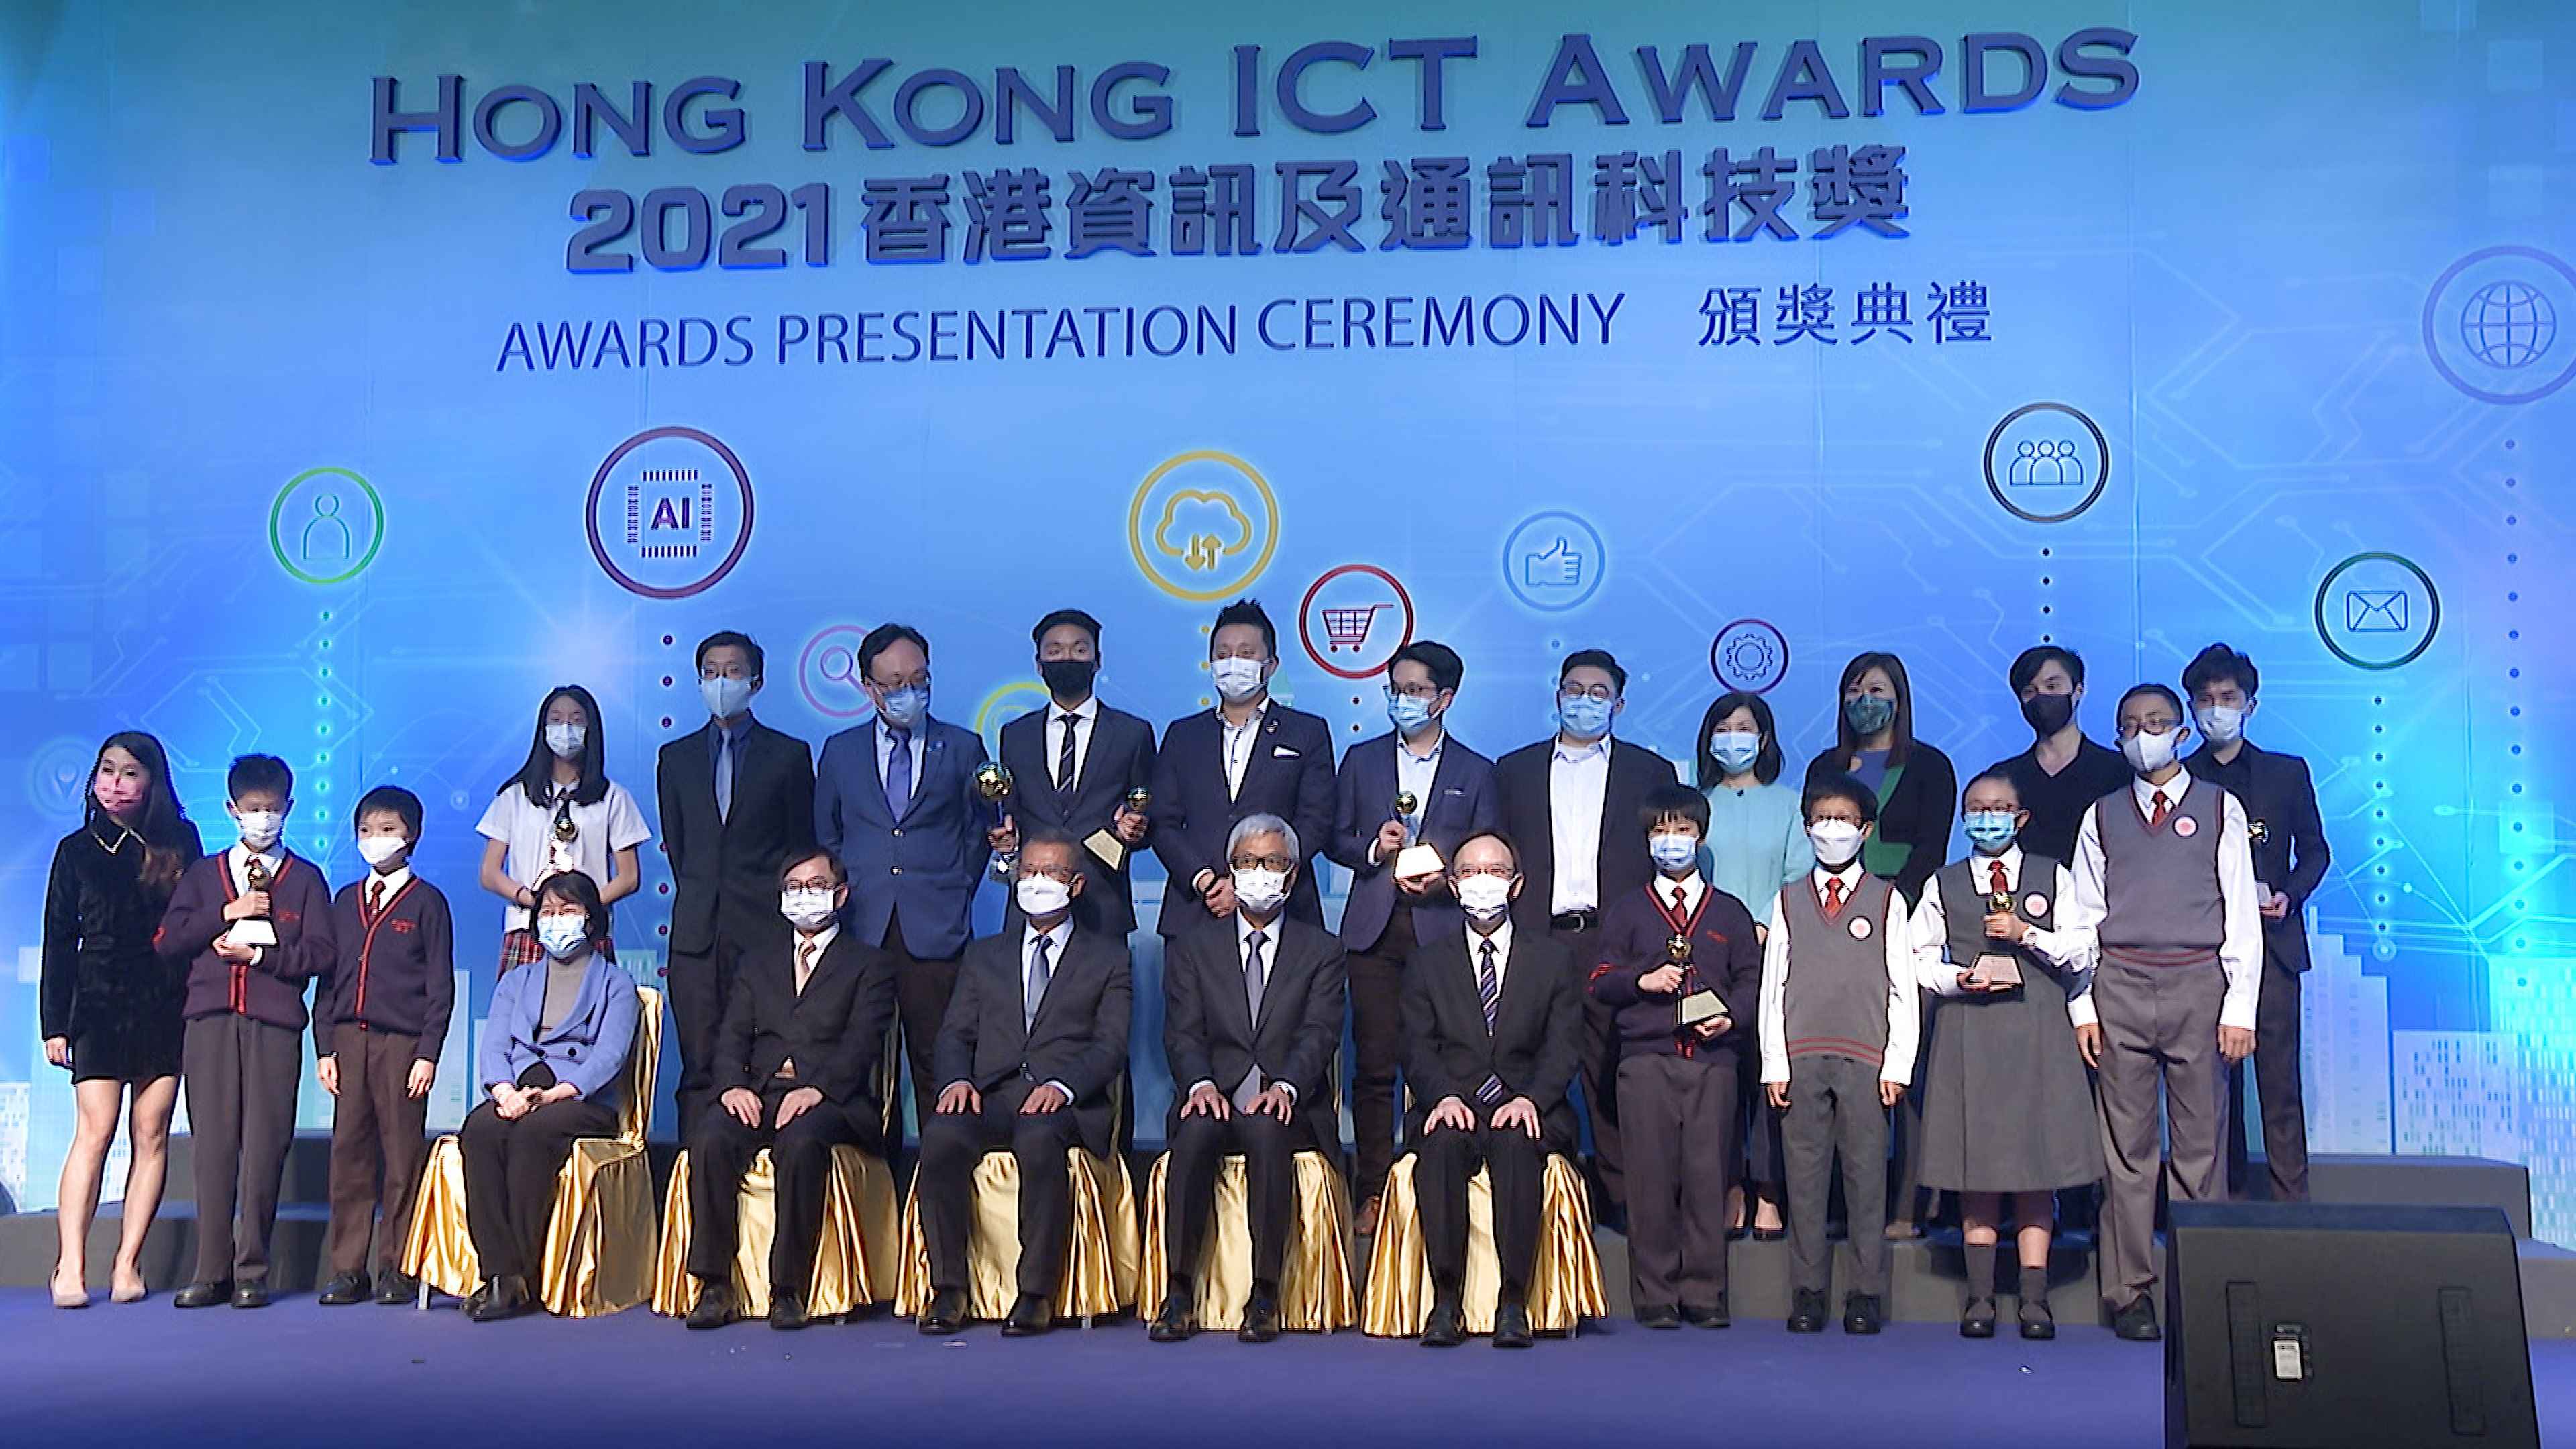 Hong Kong ICT Awards 2021 Student Innovation Award Winners Group Photo